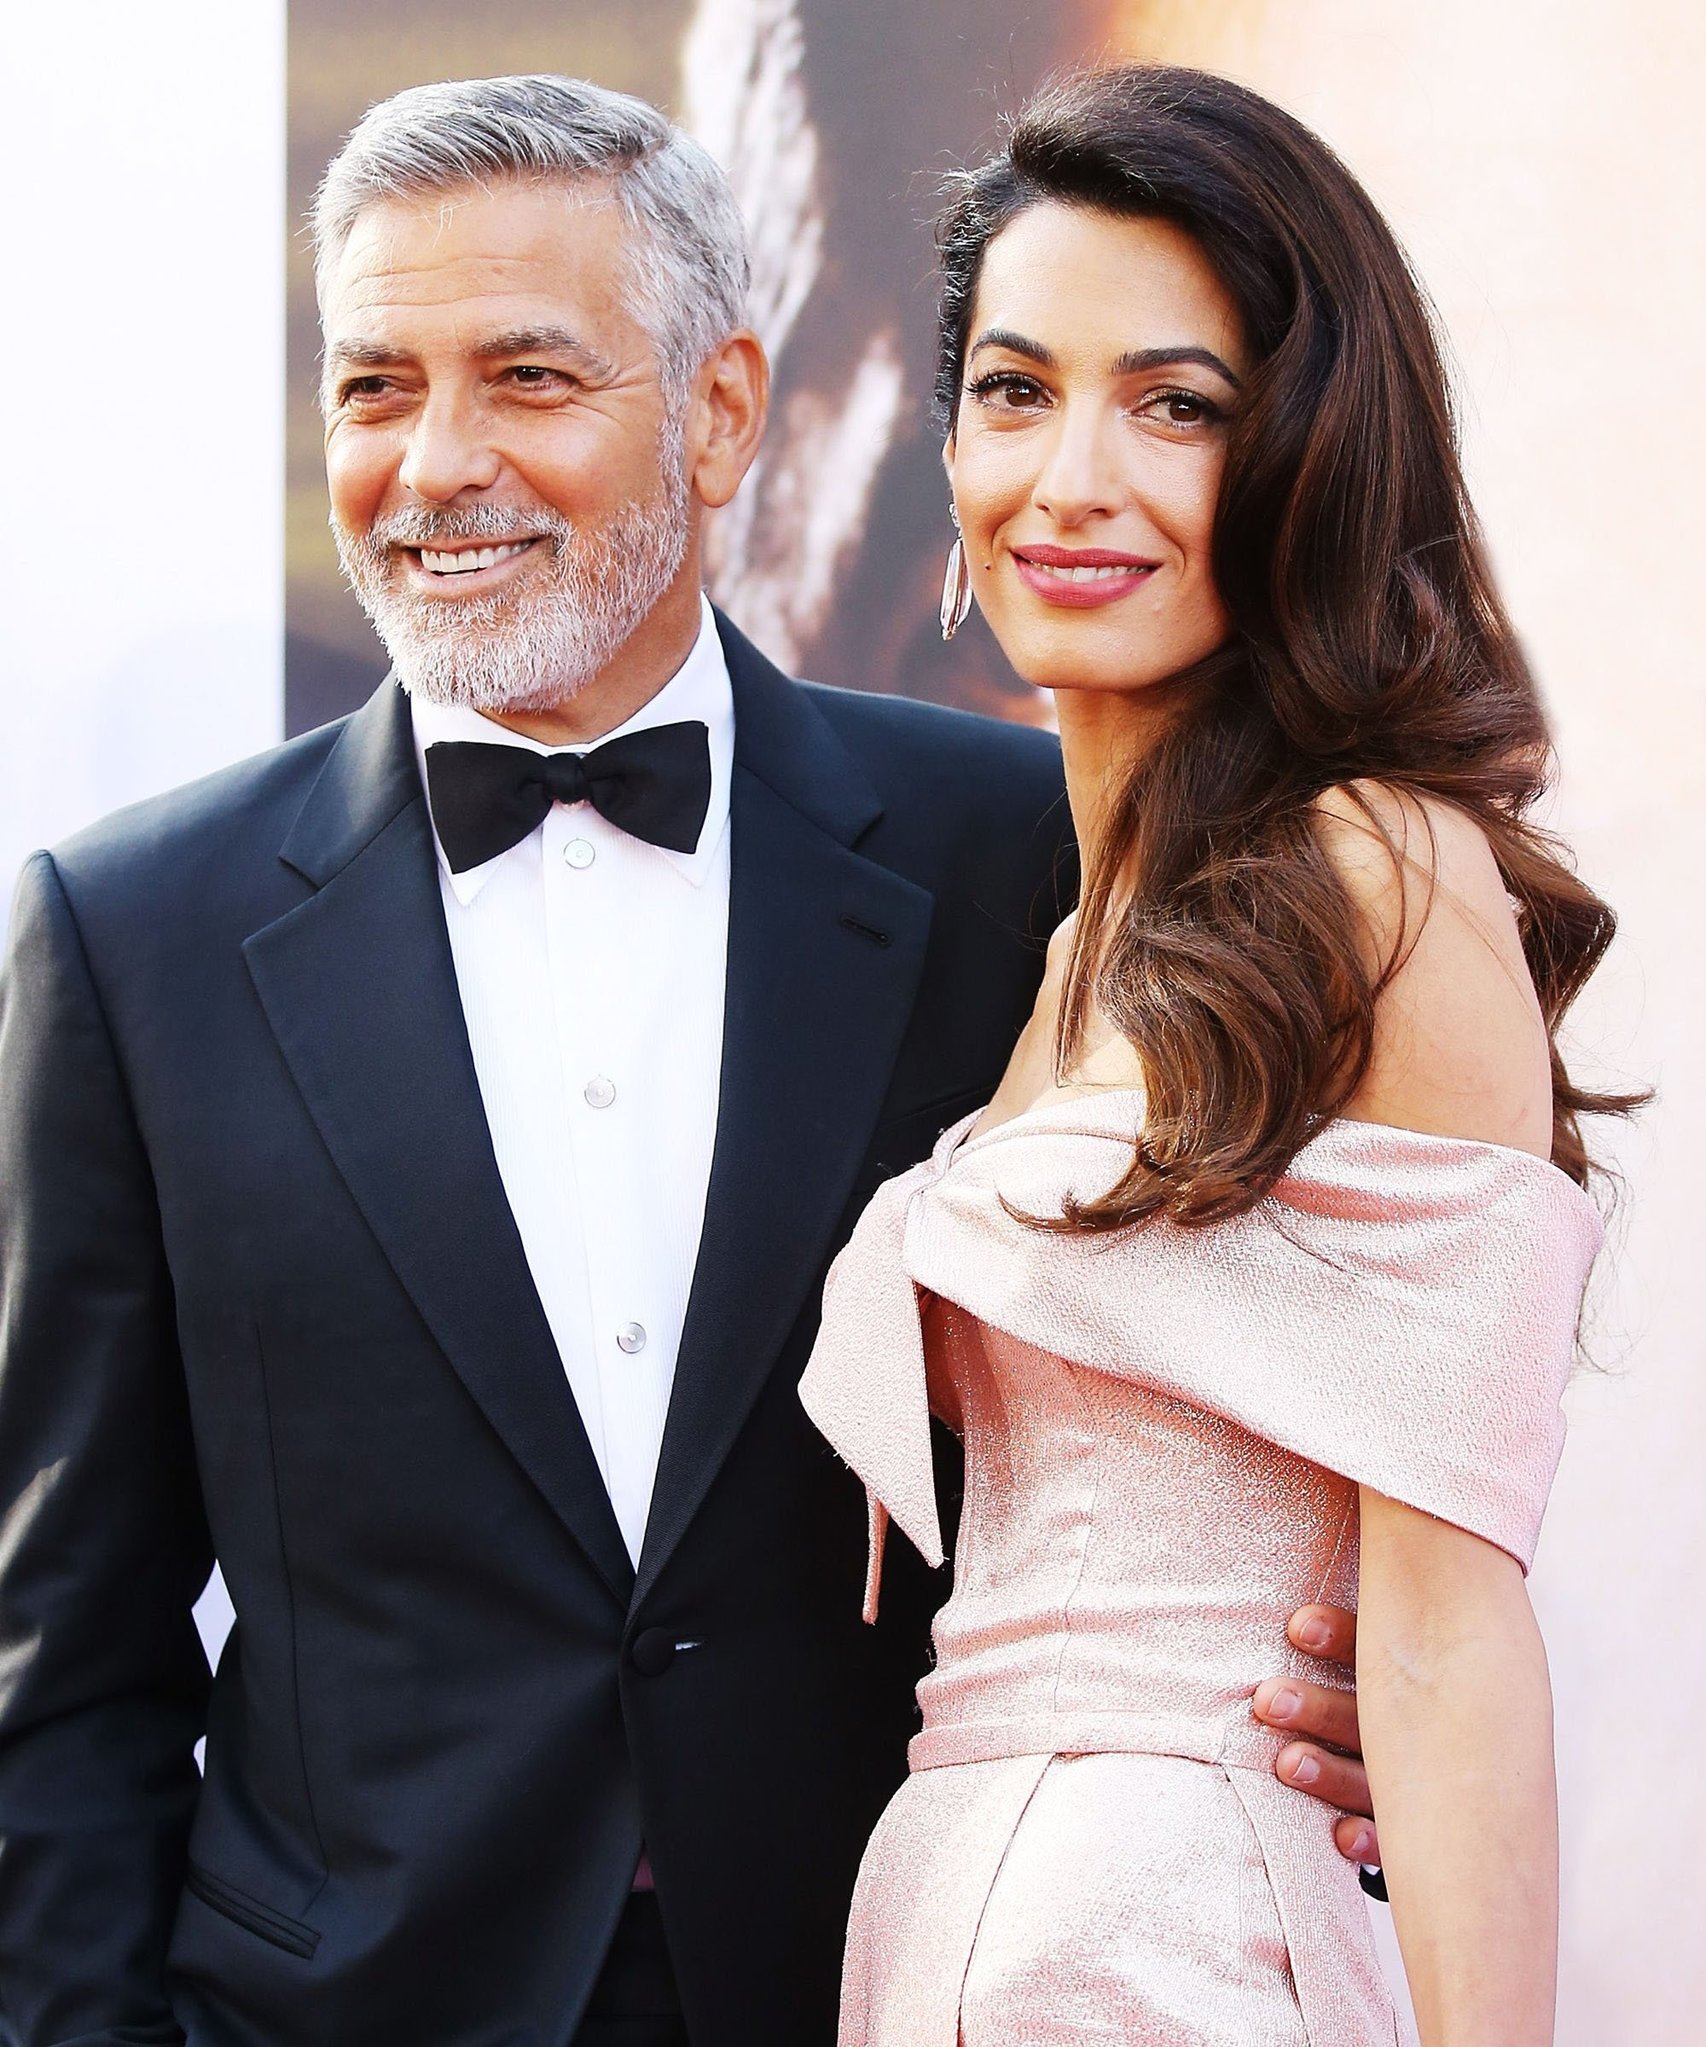 Amal Clooney ve George Clooney boşanıyor mu?